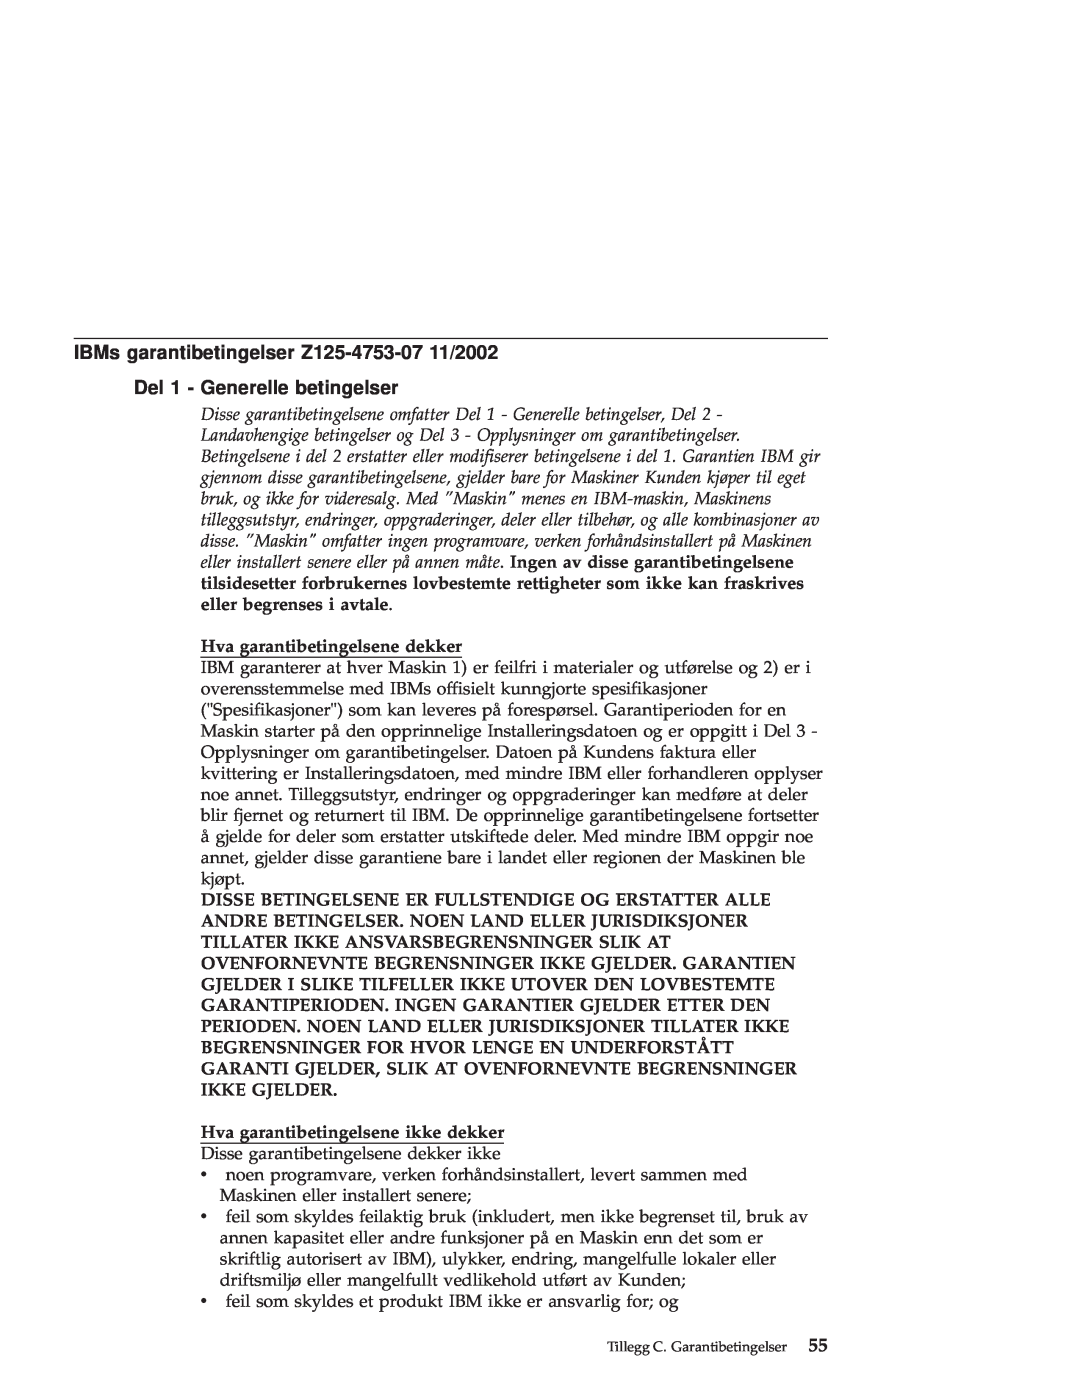 IBM R50 manual IBMs garantibetingelser Z125-4753-0711/2002, Del 1 - Generelle betingelser, Hva garantibetingelsene dekker 